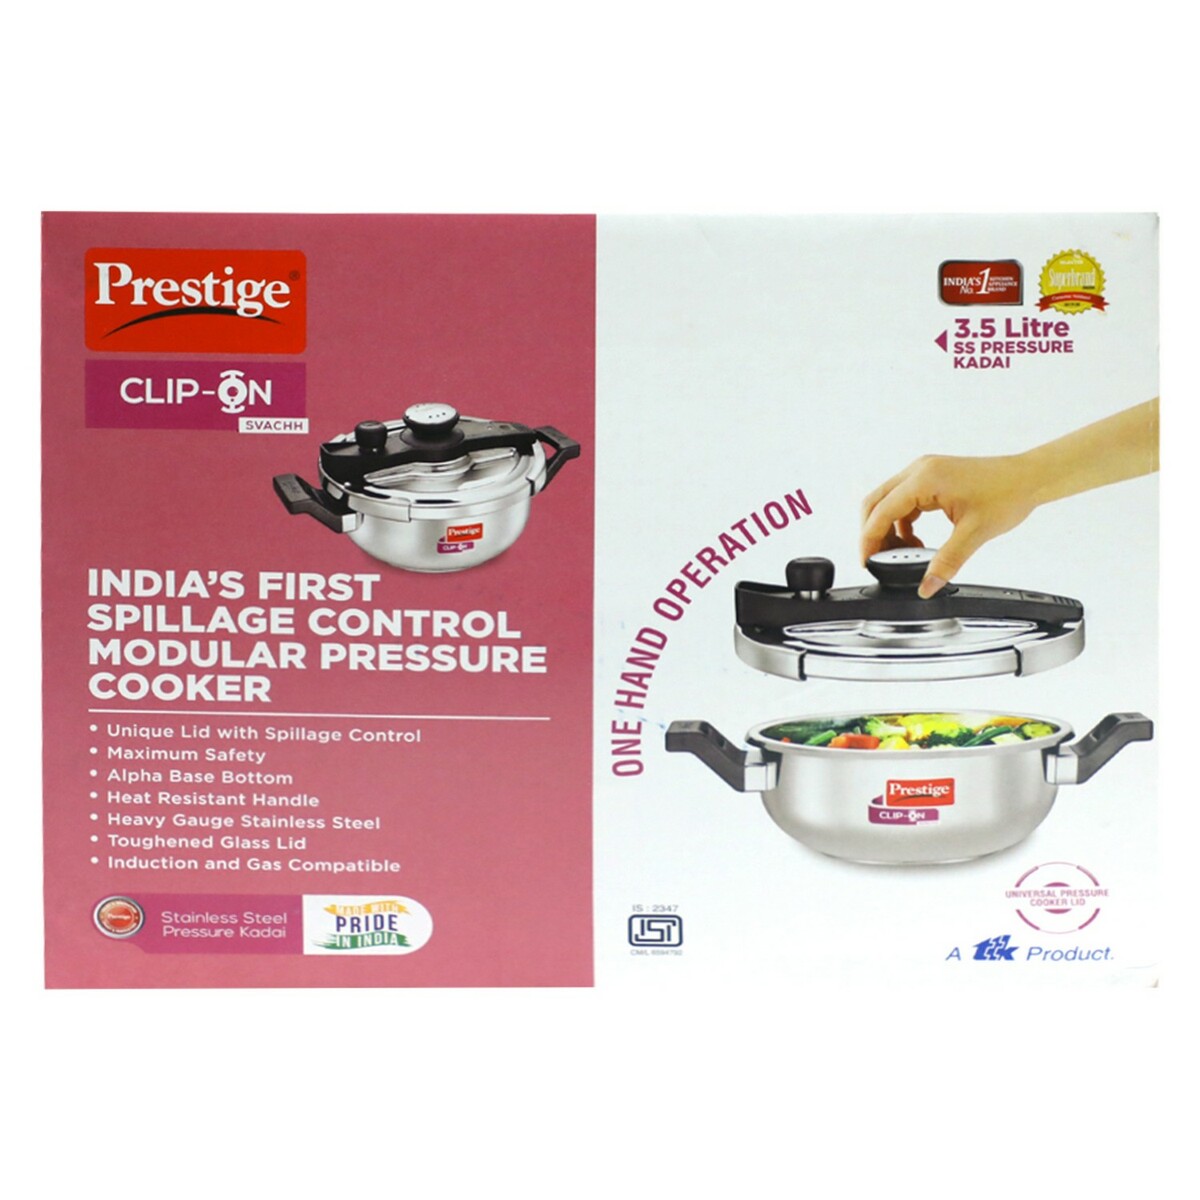 Prestige Stainless Steel Cooker Clip On Svachh 3.5Ltr